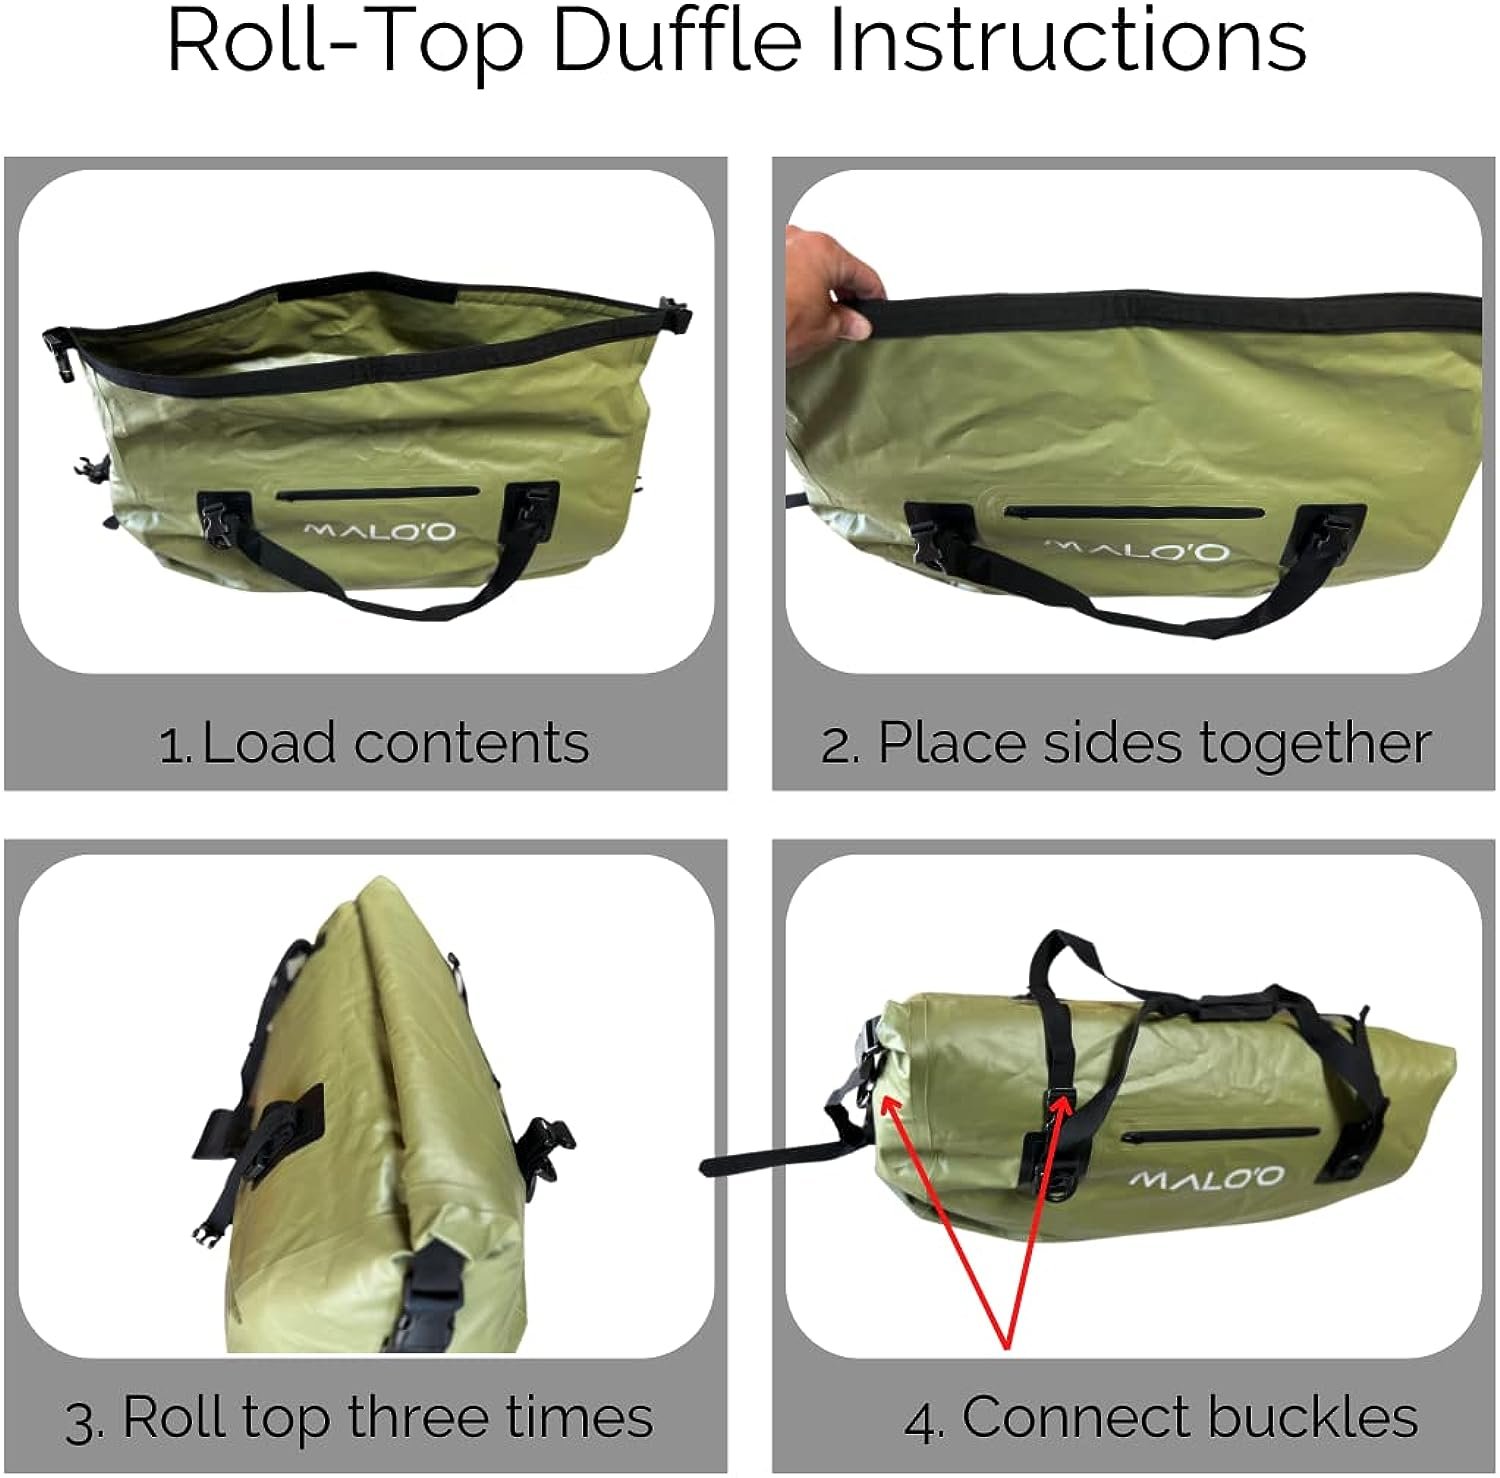 Malo’o Waterproof Dry Bag Duffel 40L Review